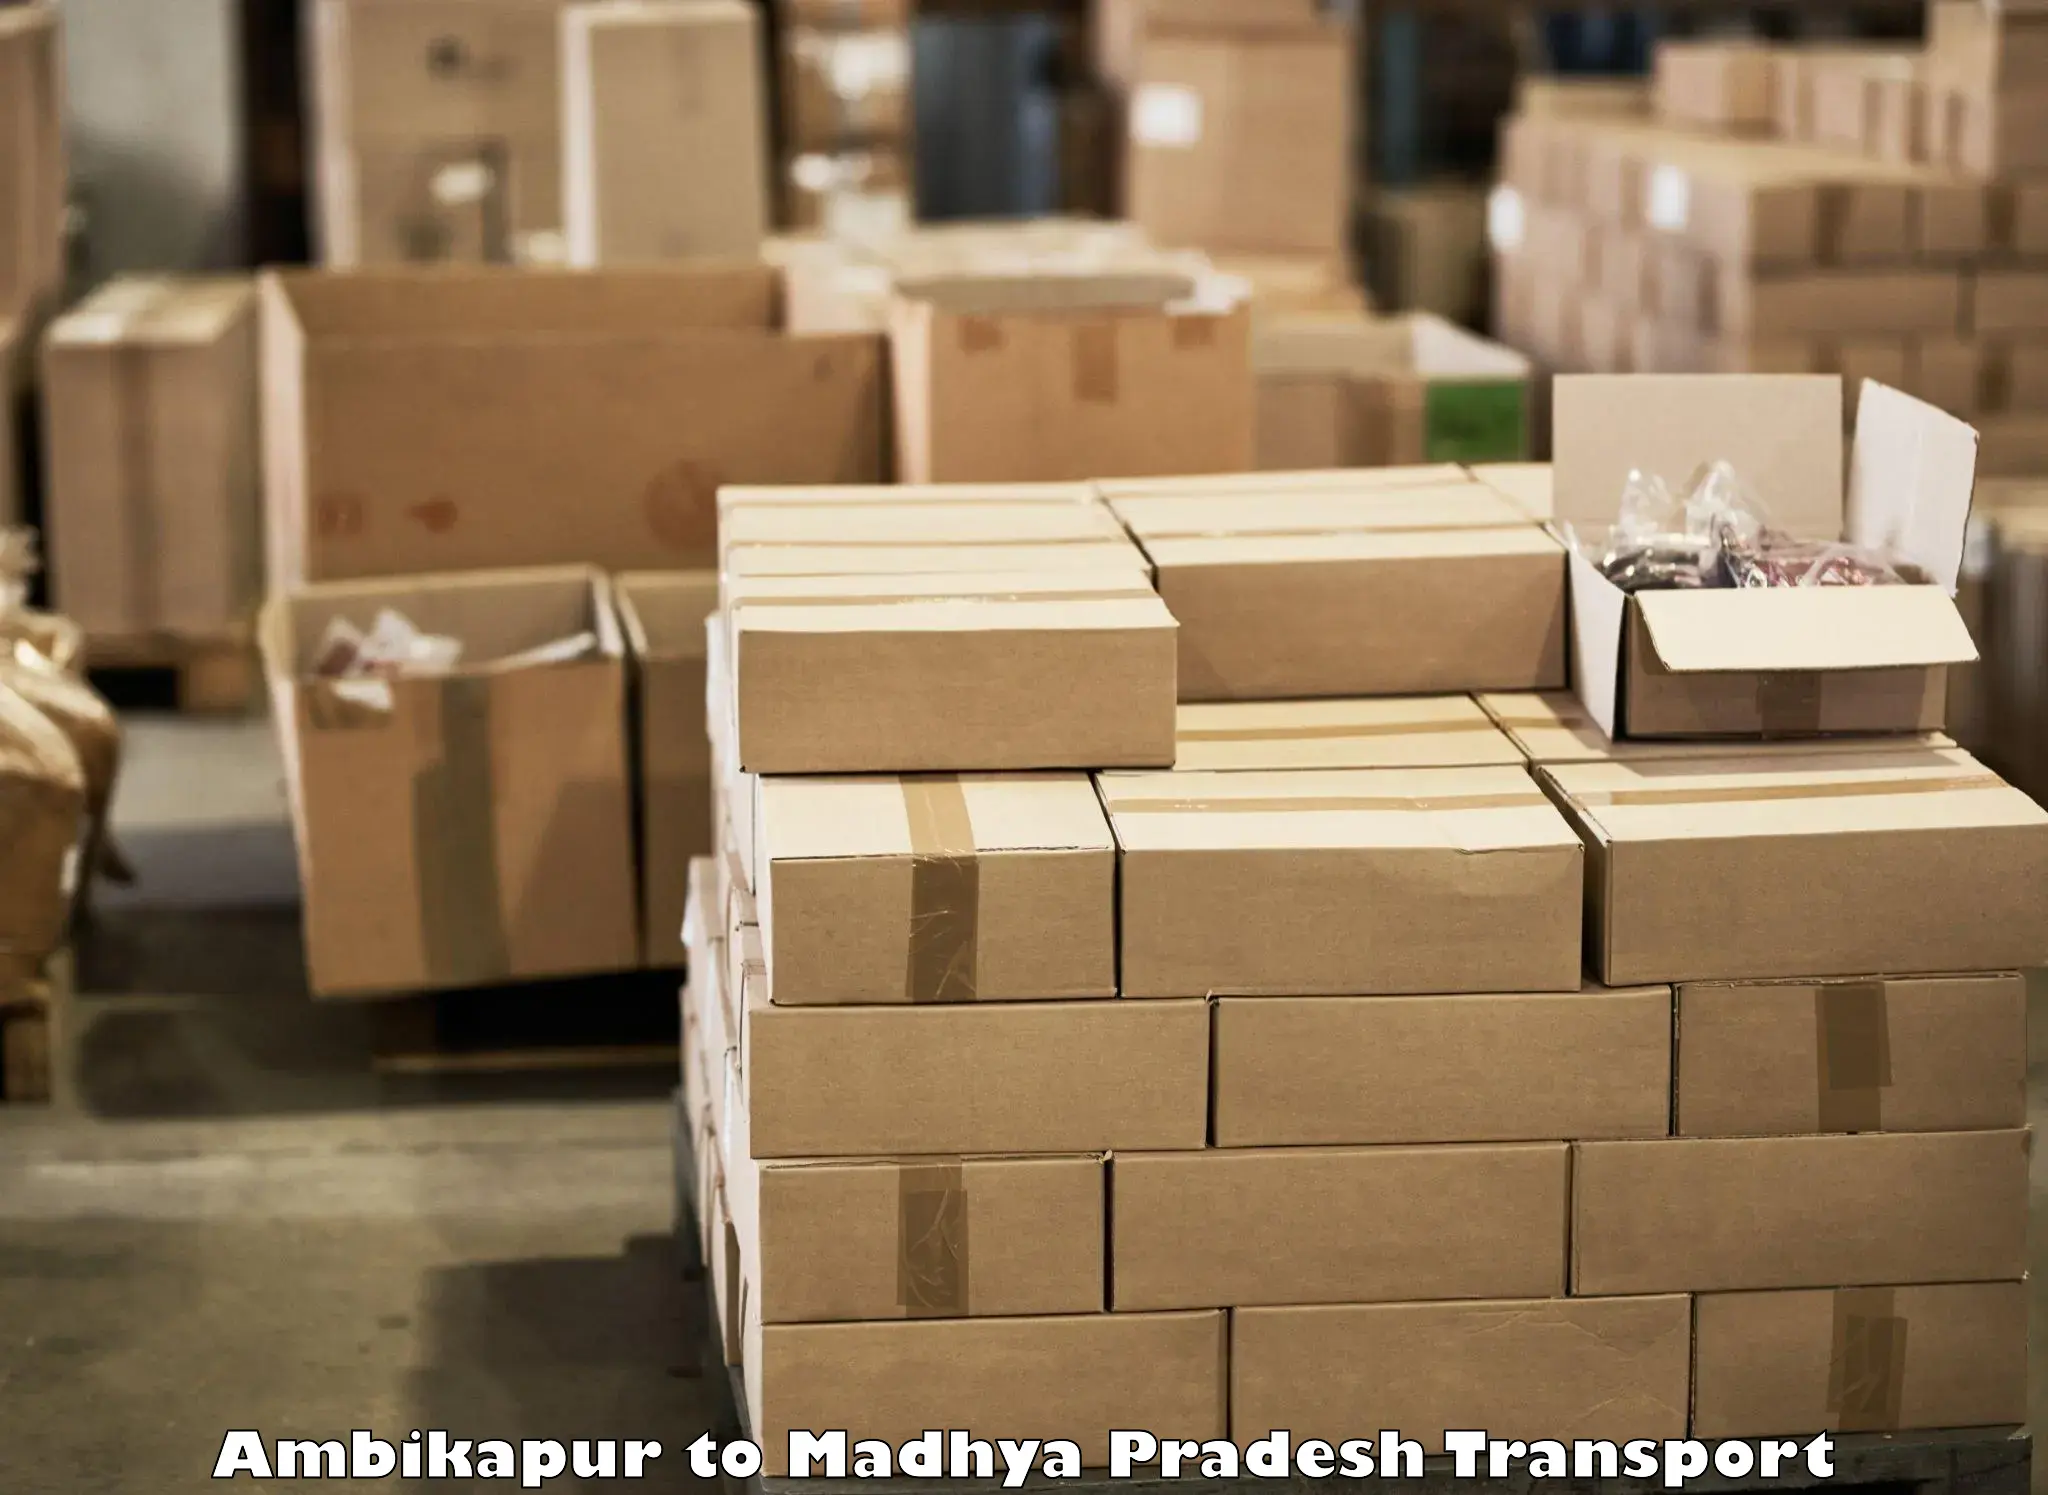 Delivery service Ambikapur to Madhya Pradesh